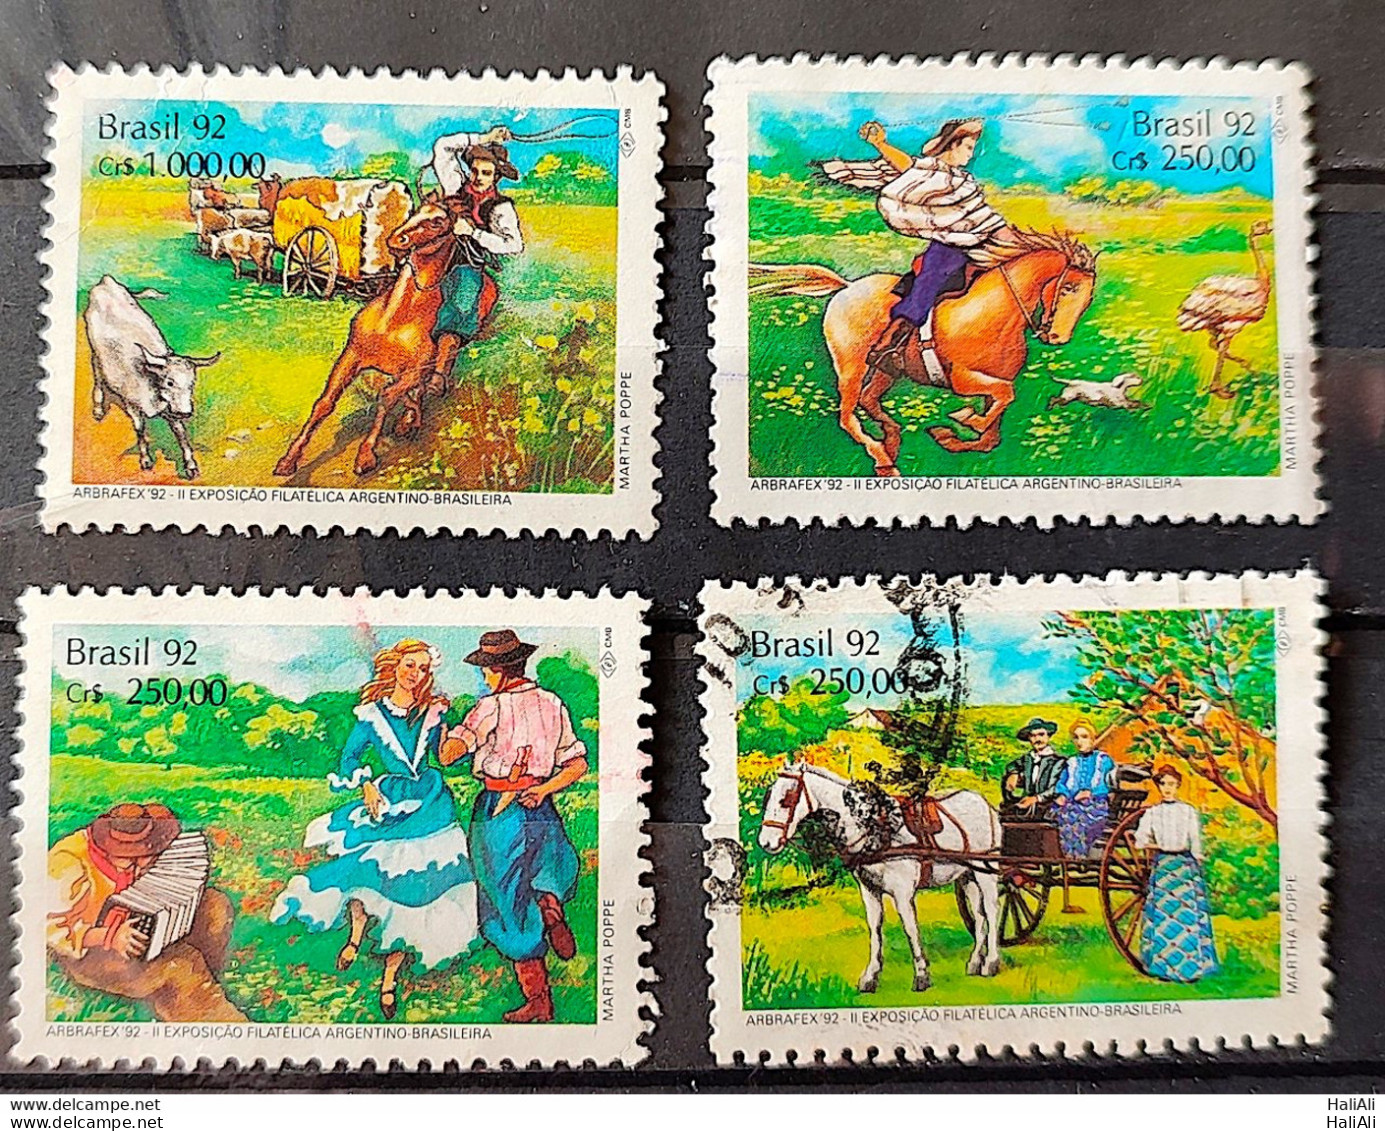 C 1778 Brazil Stamp Arbrafex Argentina Costumes Gauchos Music Gaita 1992 Complete Series Circulated 5 - Used Stamps